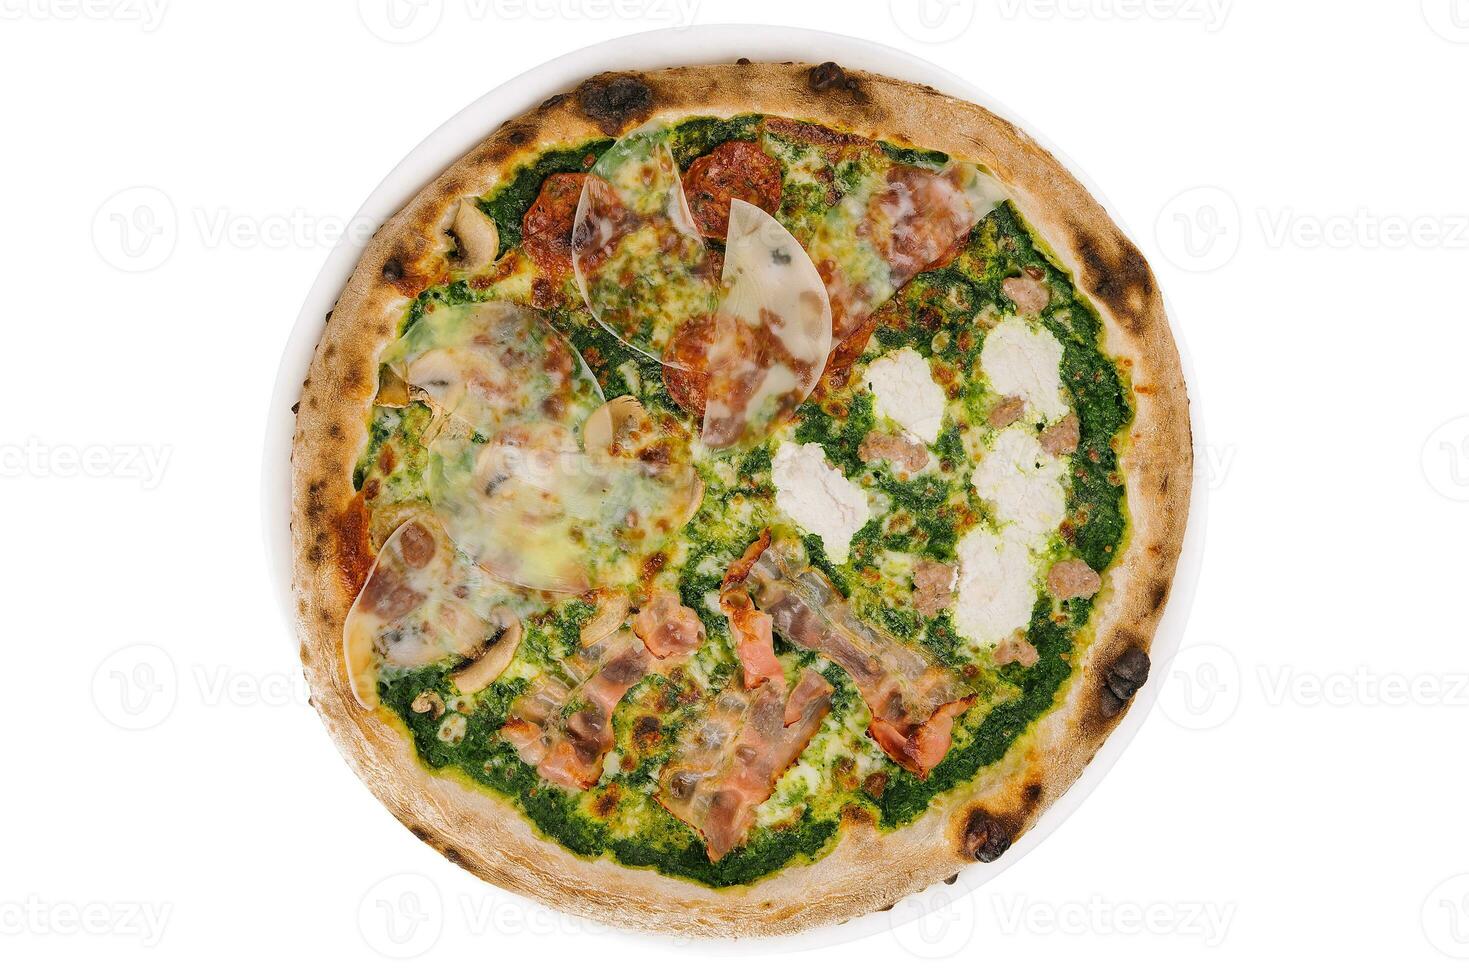 Kruste Brokkoli Base niedrig Kohlenhydrate Keto Pizza mit Salami, Avocado foto